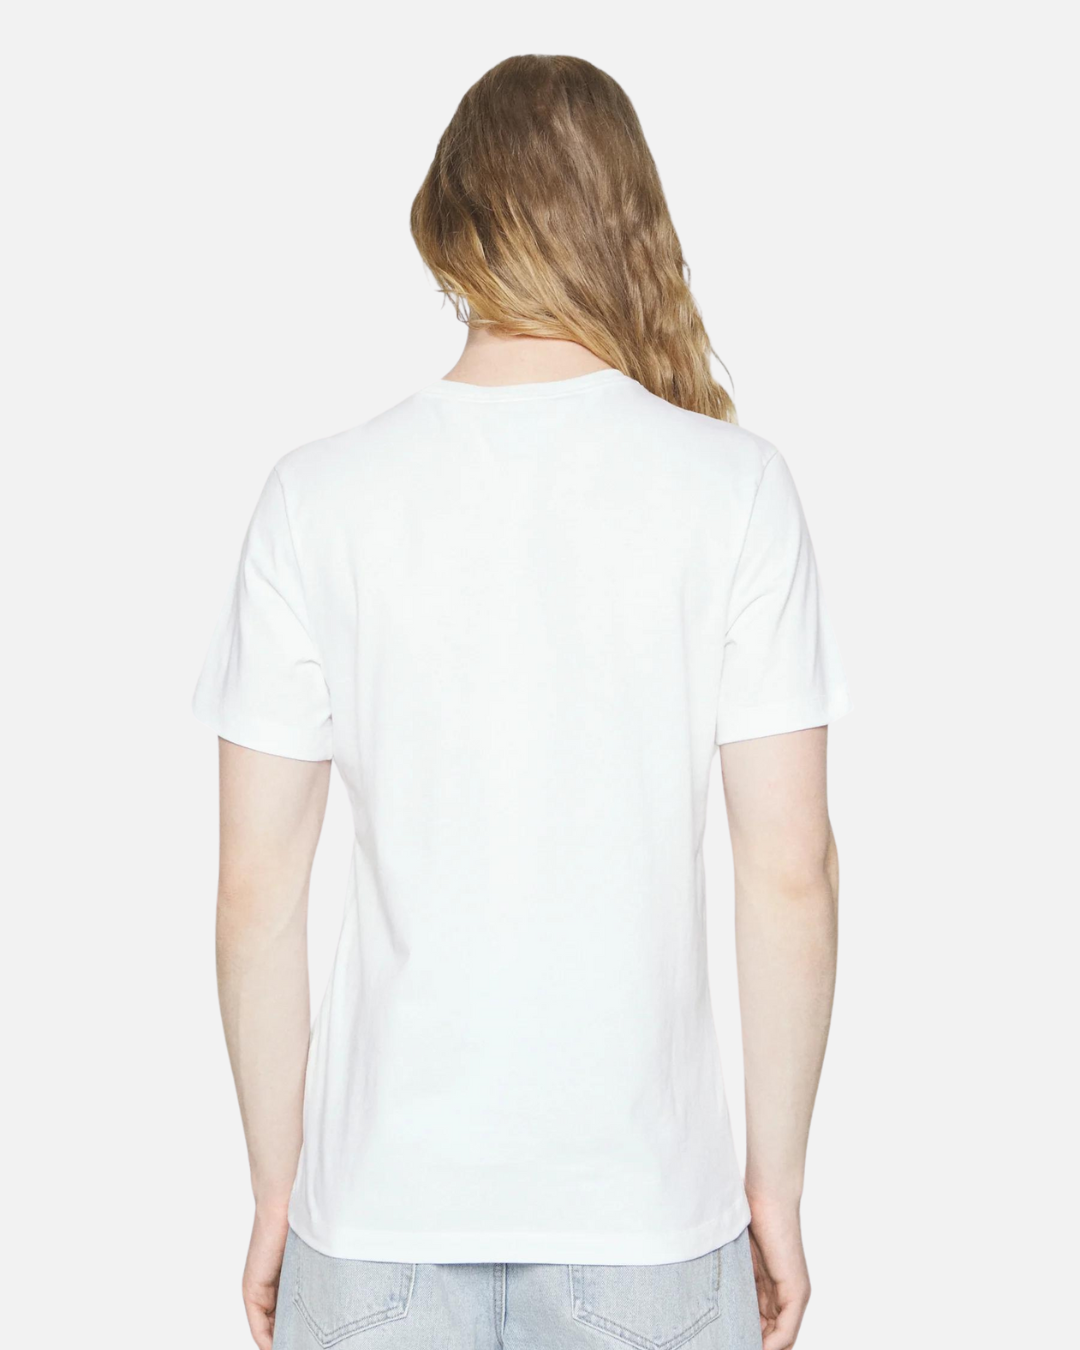 Nike Futura T-Shirt - White/Black/Red